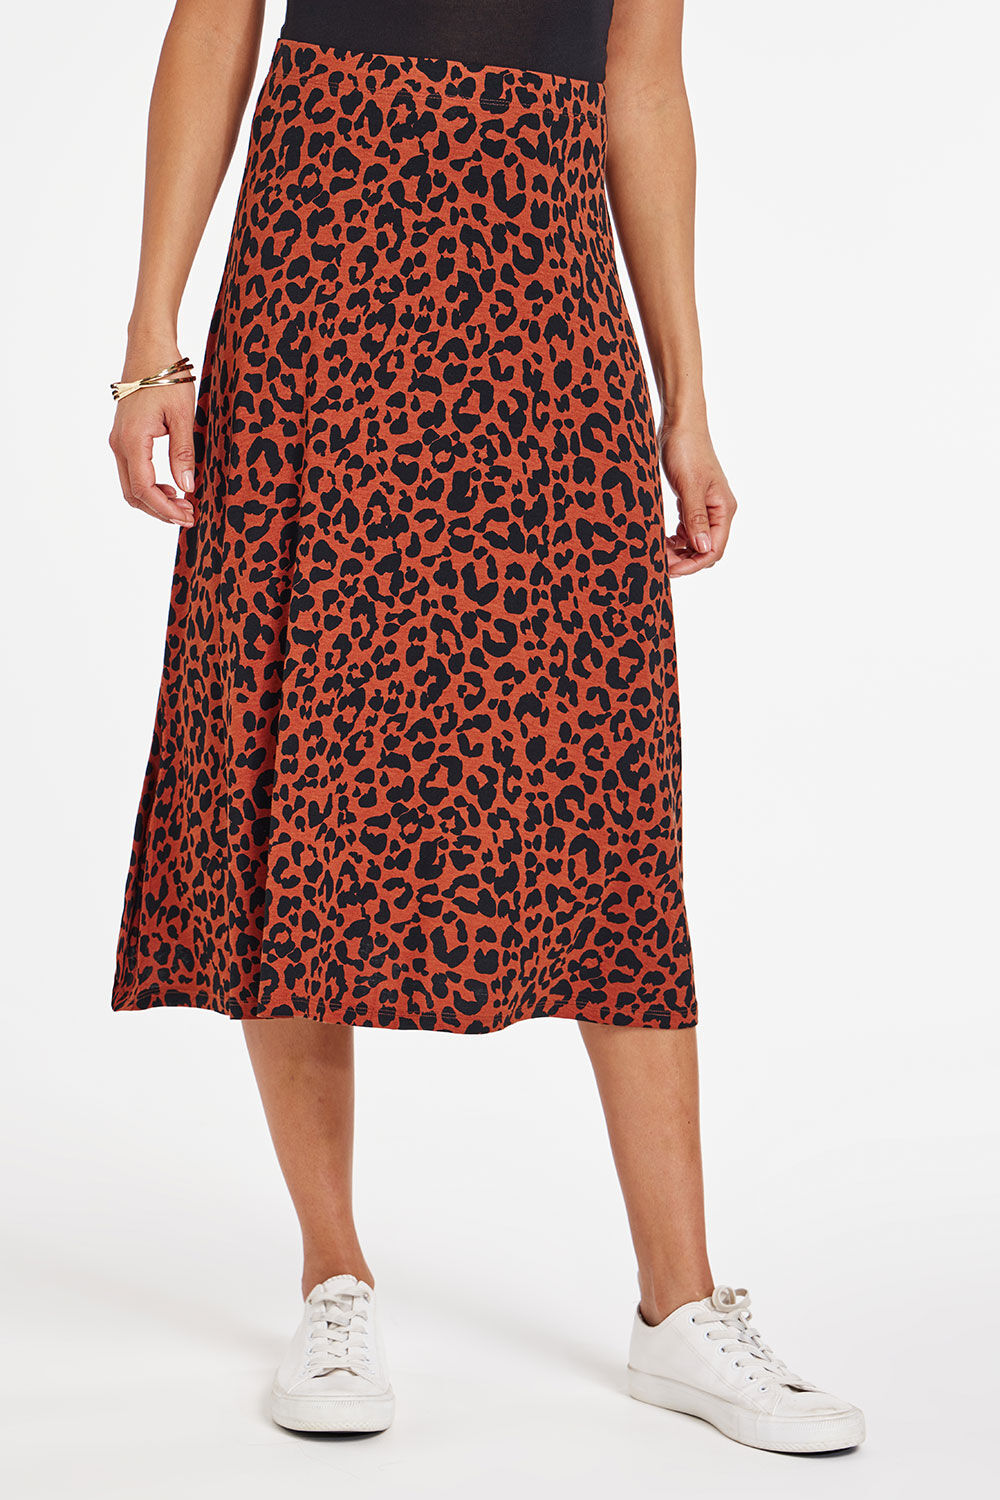 Bonmarche Brown Animal Print Flippy Jersey Elasticated Skirt, Size: 24